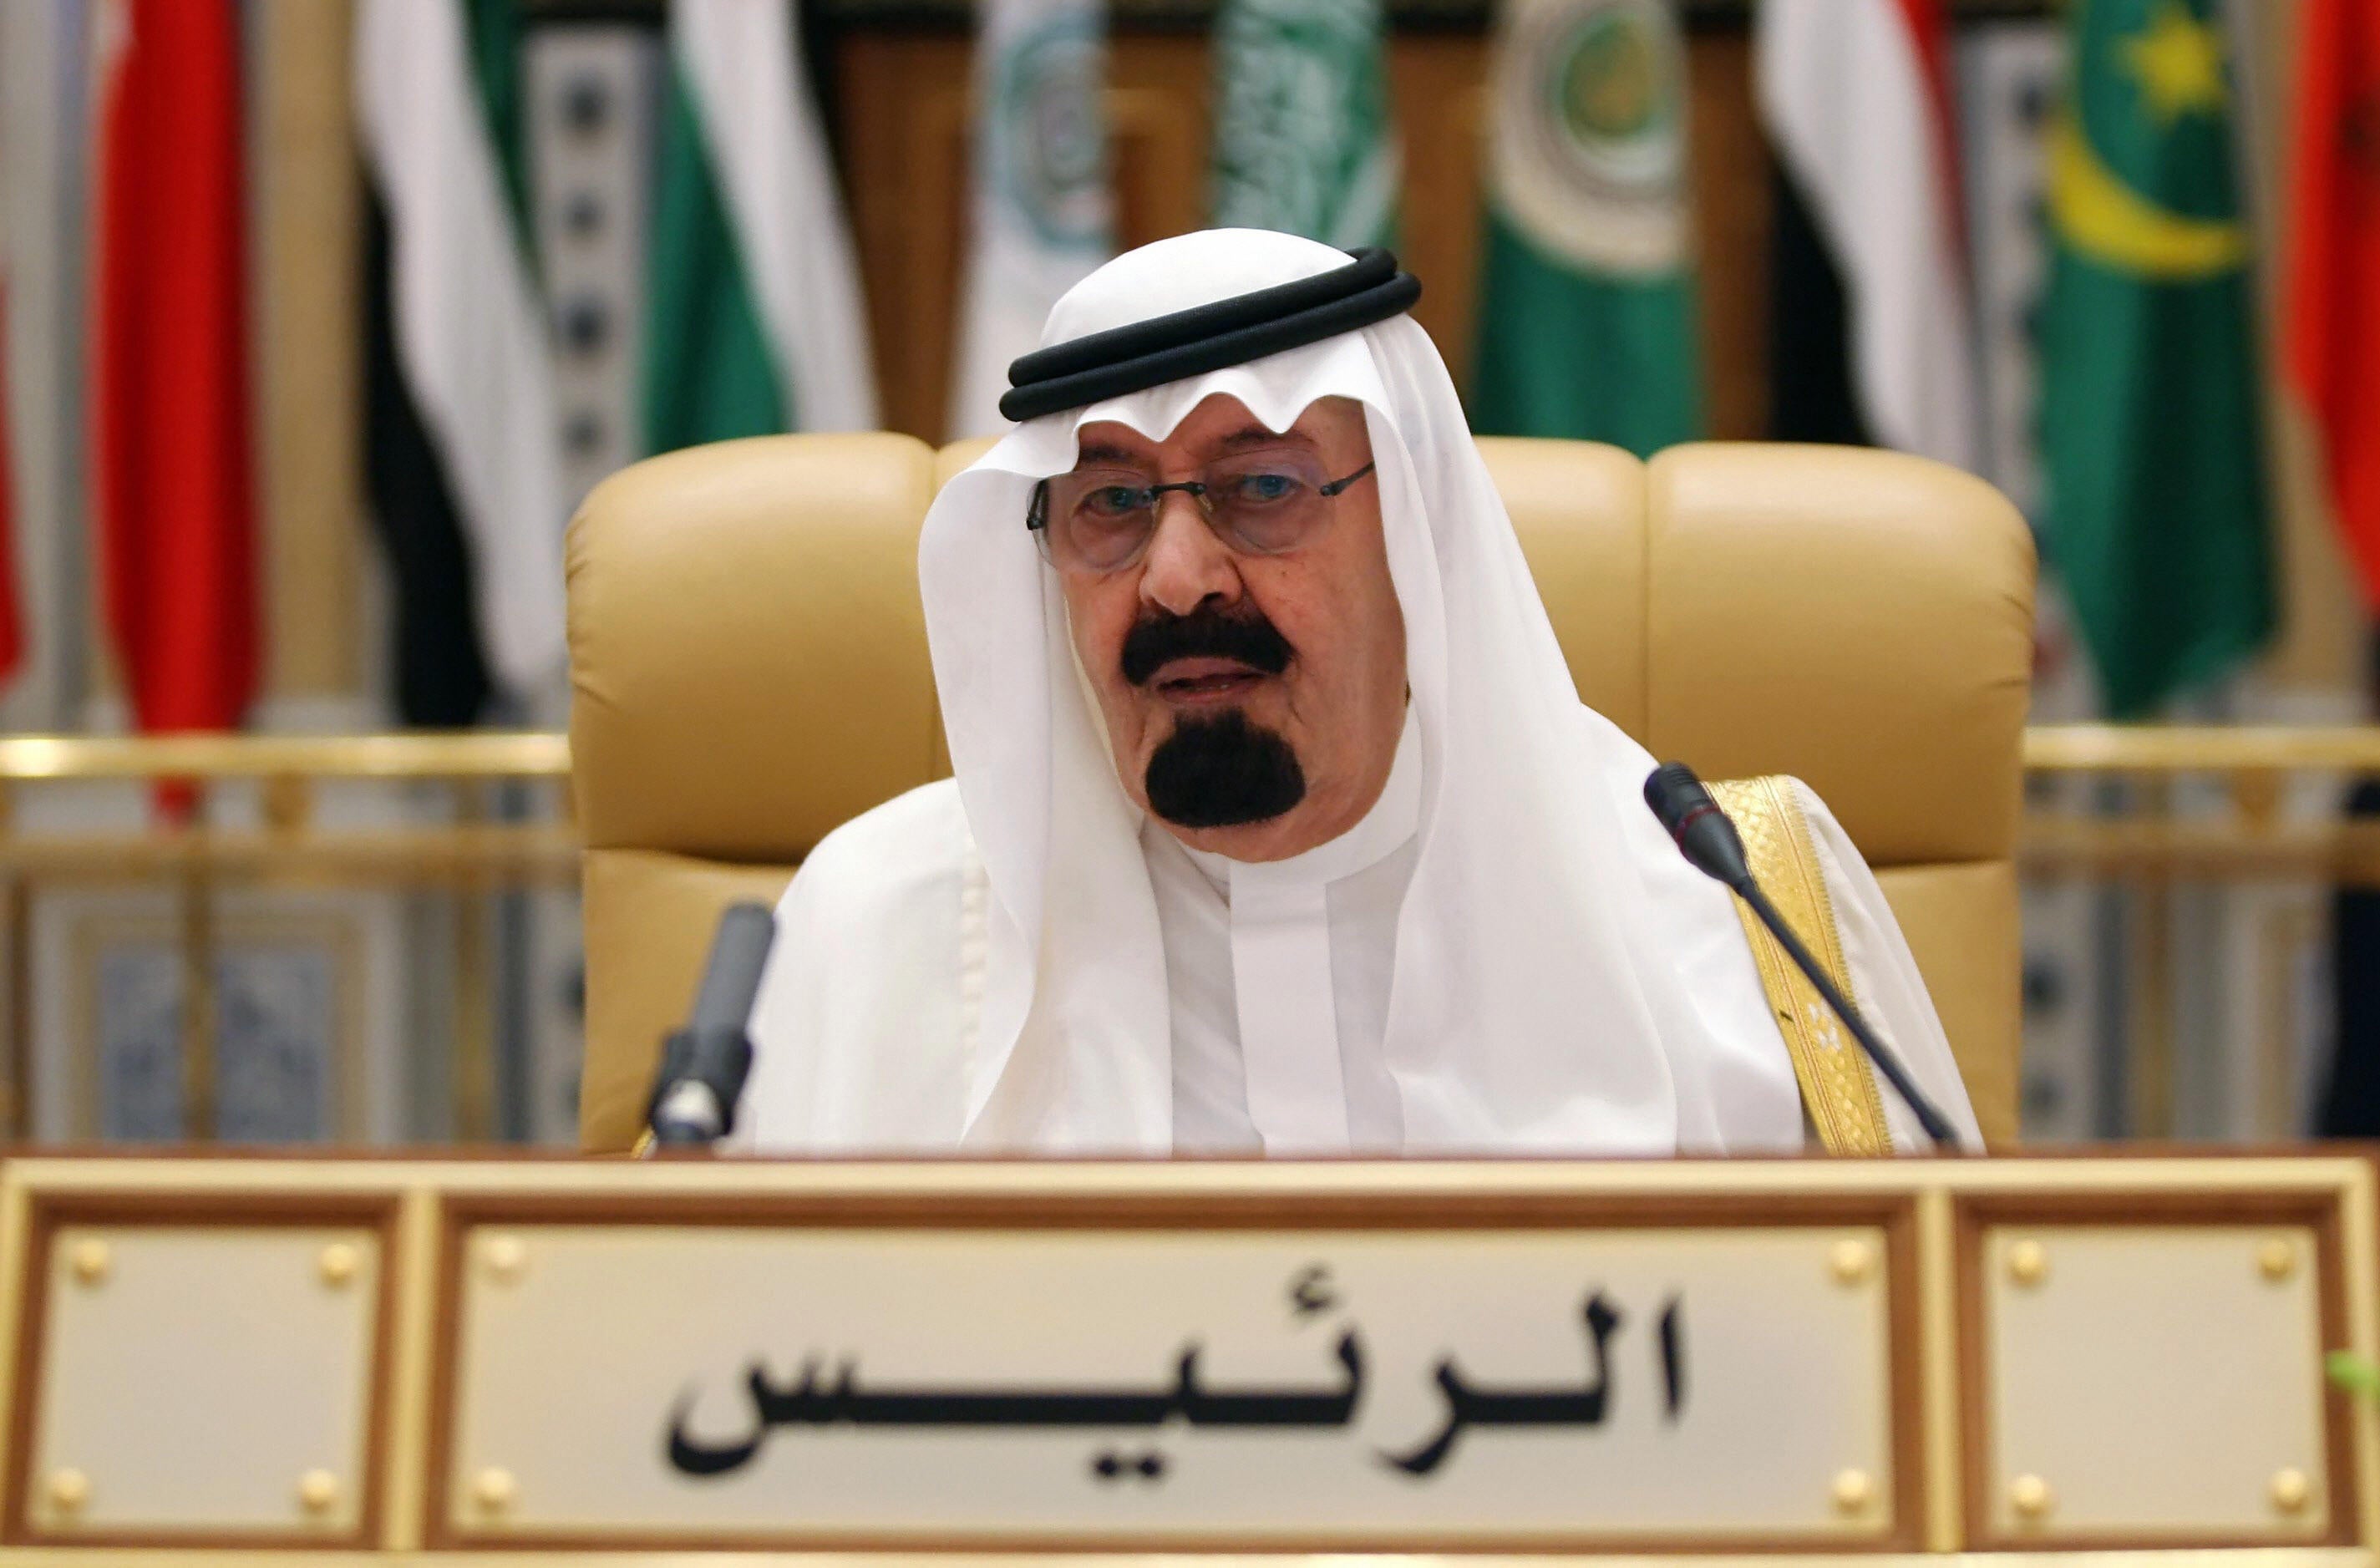 Saudi King Abdullah bin Abdul Aziz is keen on combating narcotics